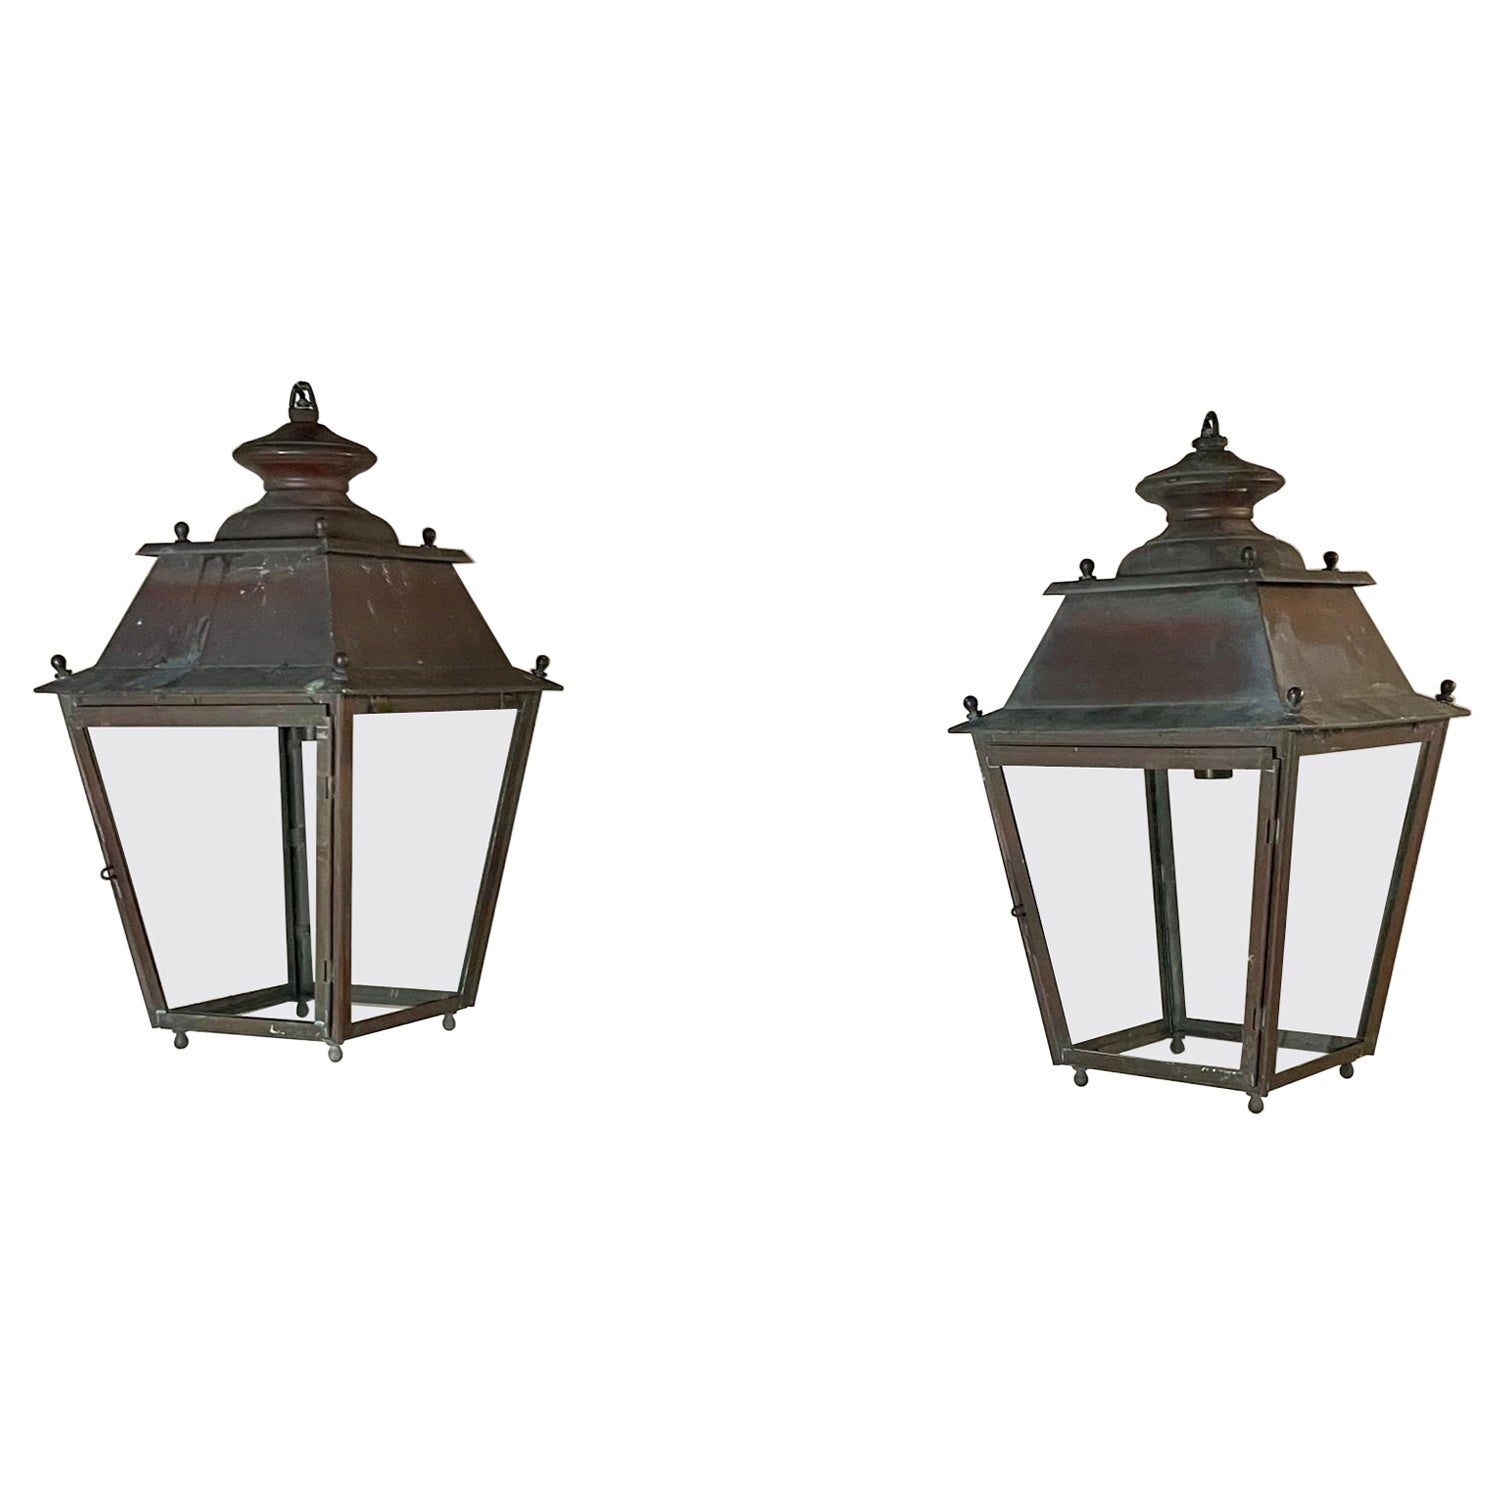 Mid-20th Century French Copper Lanterns , Kitchen , Outdoor Lighting, Hallway